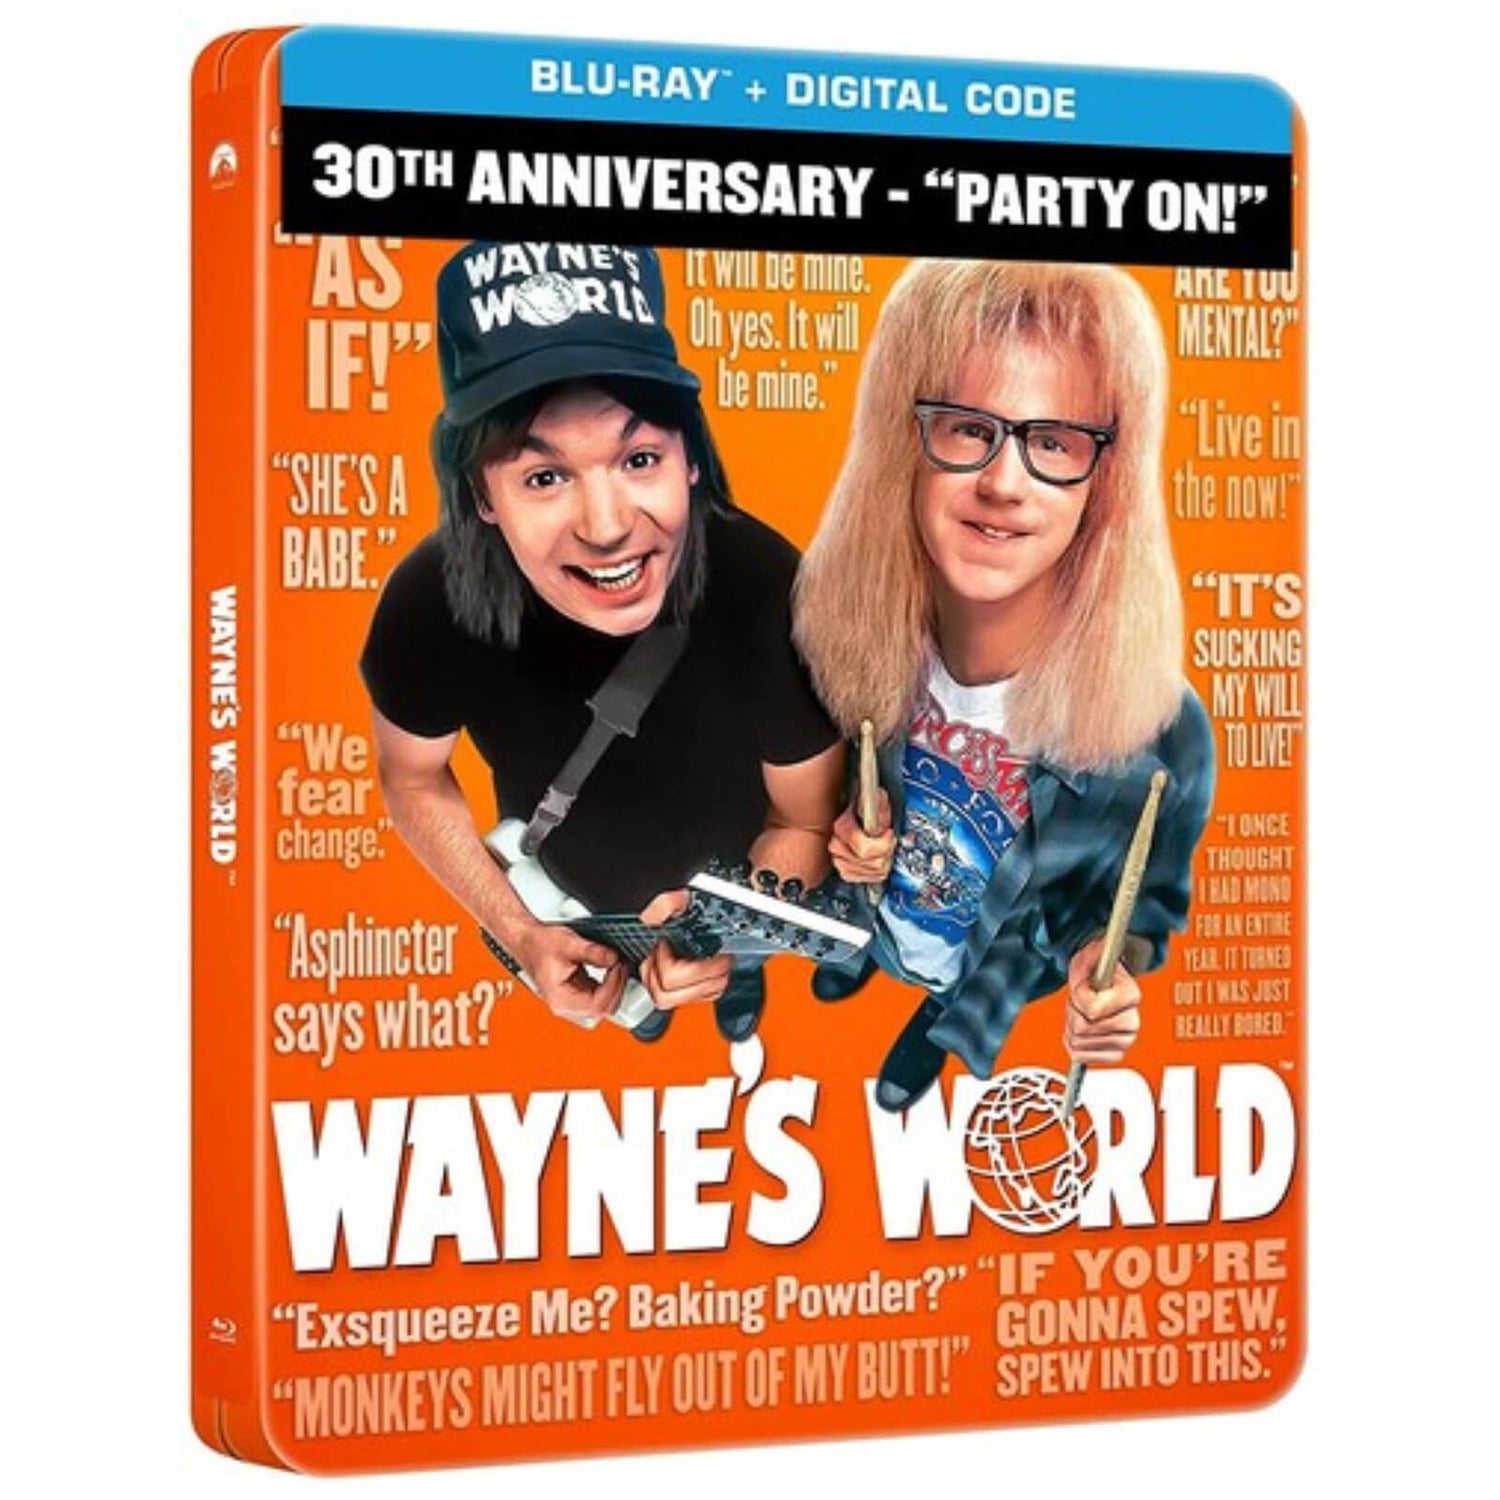 Wayne's World - Anniversary Edition Steelbook